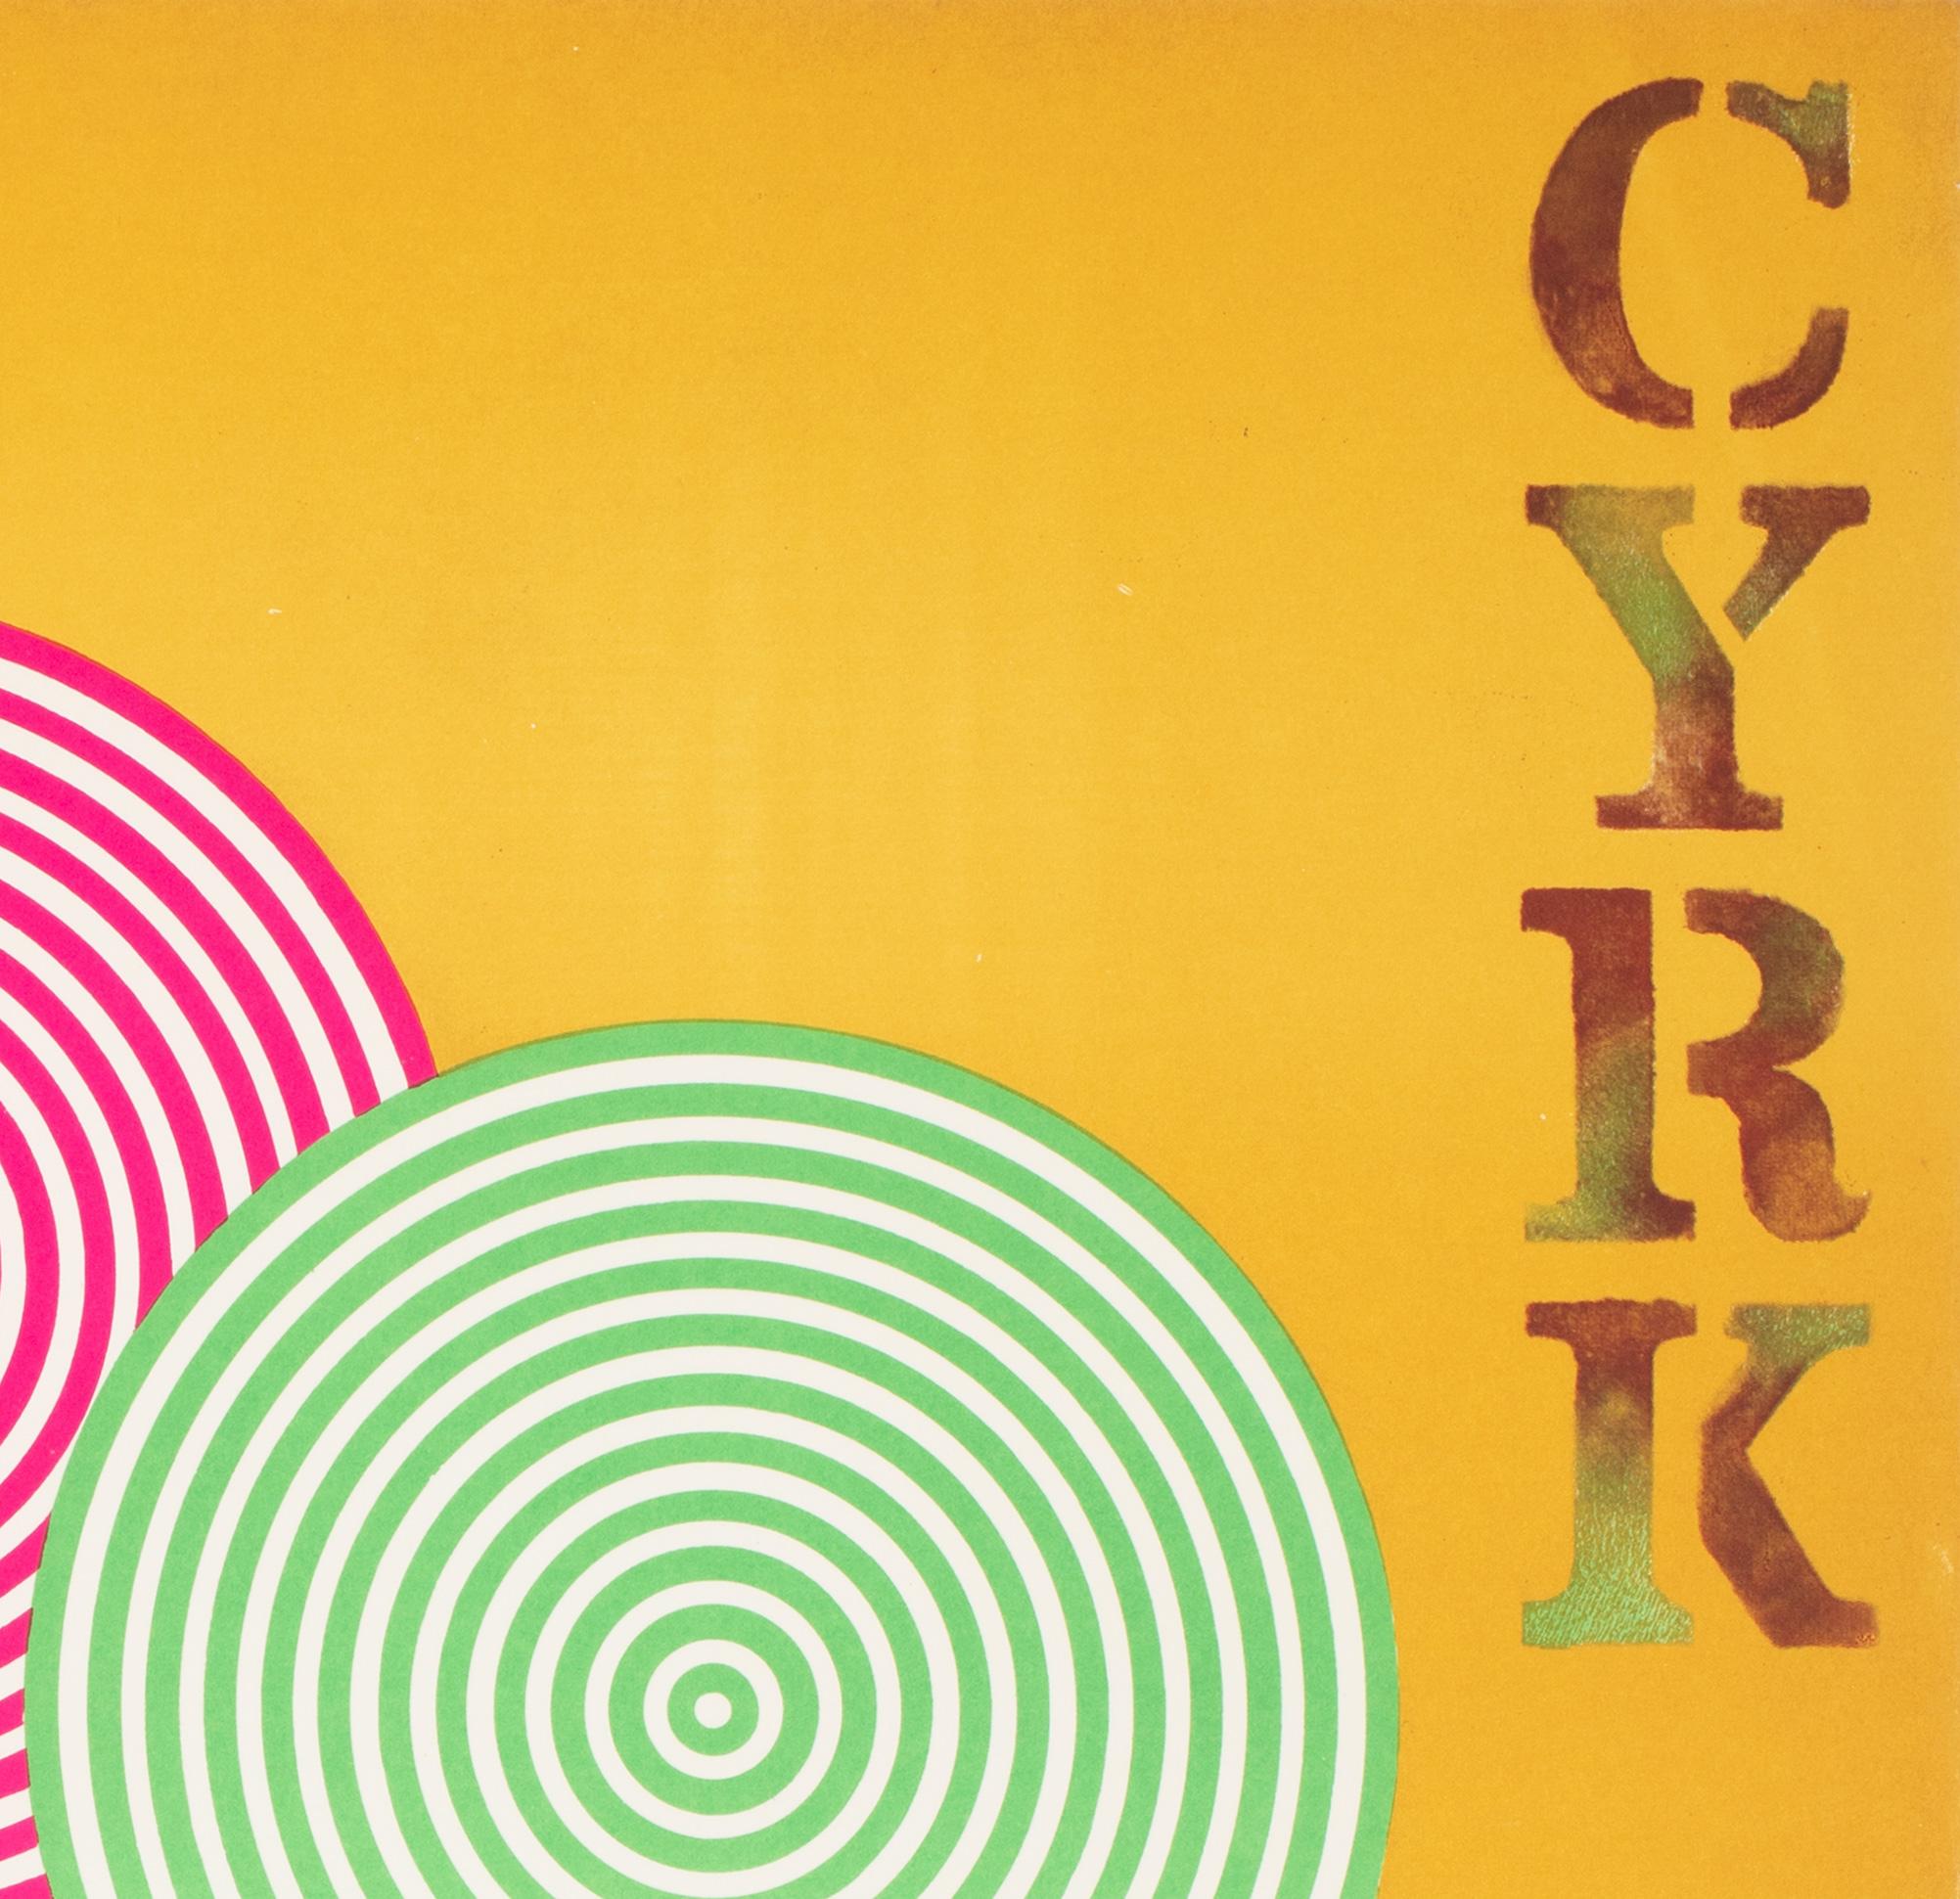 Cyrk Mustached Juggler 1973 Polish Circus Poster, Urbaniec 2